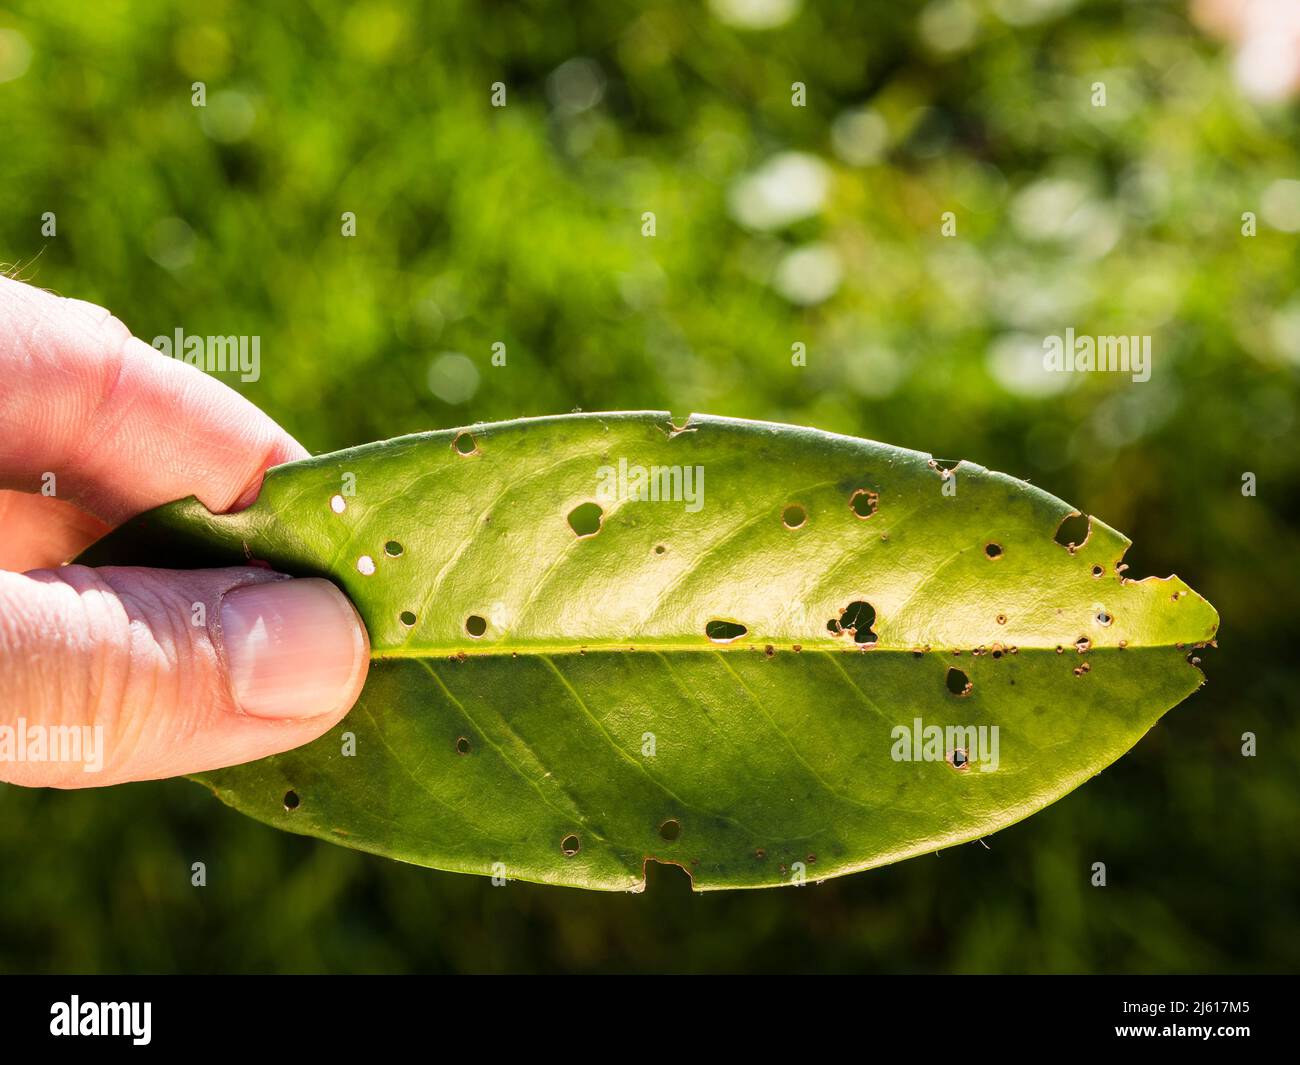 hand holding leaf of cherry laurel Prunus laurocerasus affected by leaf spot fungi Stigmina carpophila Stock Photo